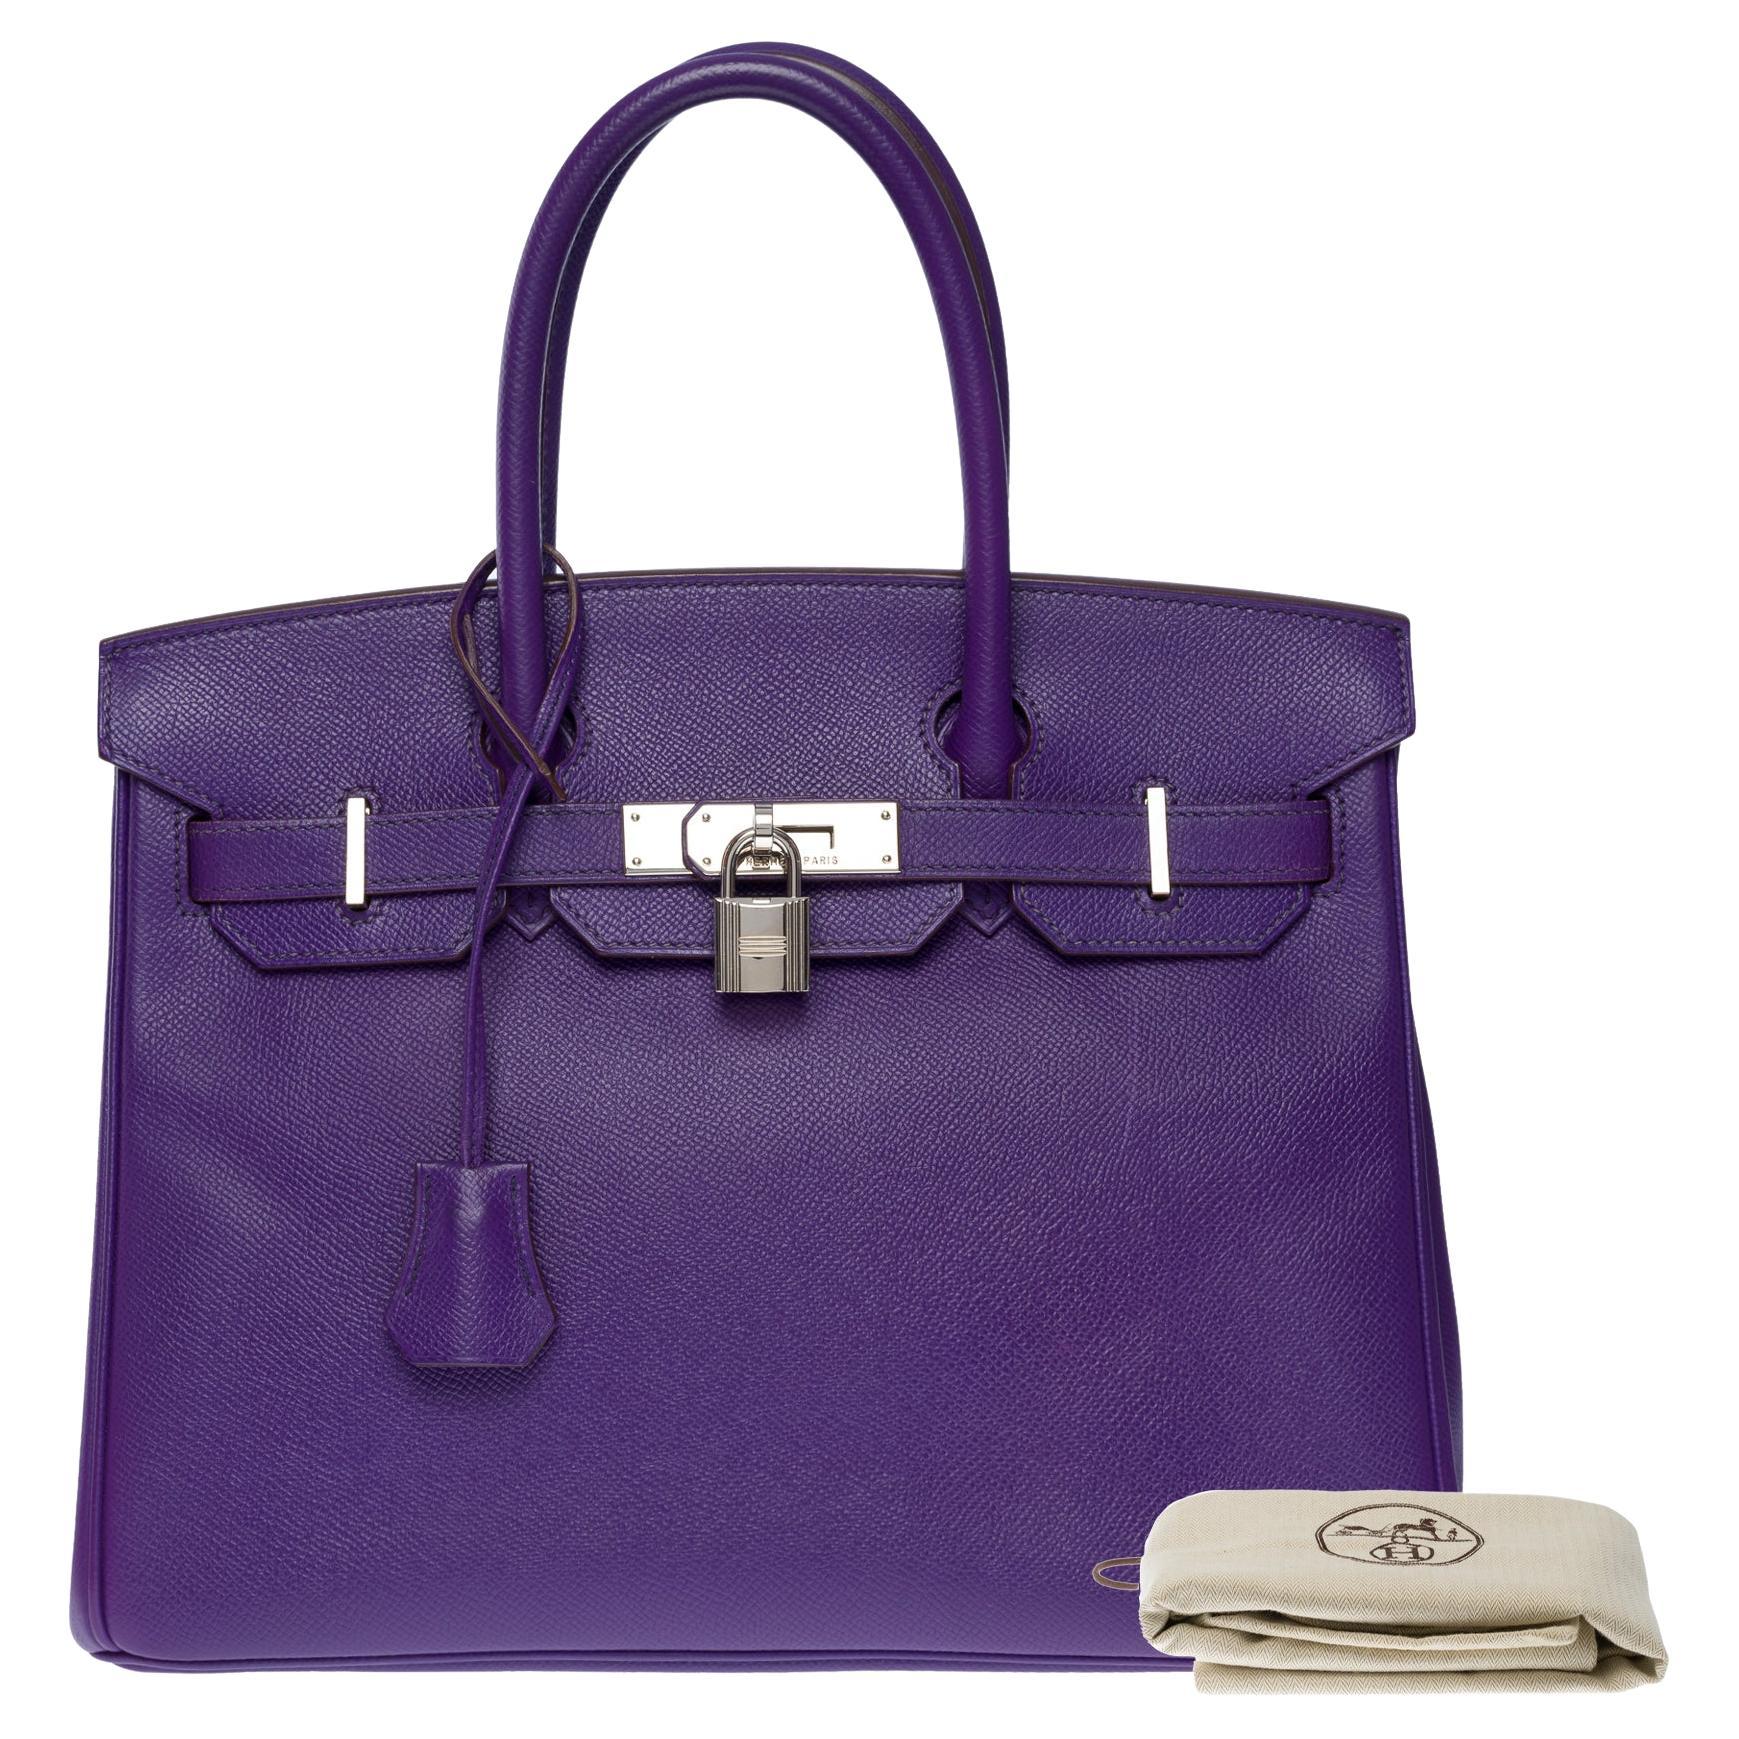 Amazing Hermès Birkin 30 handbag in Iris Epsom leather, SHW For Sale